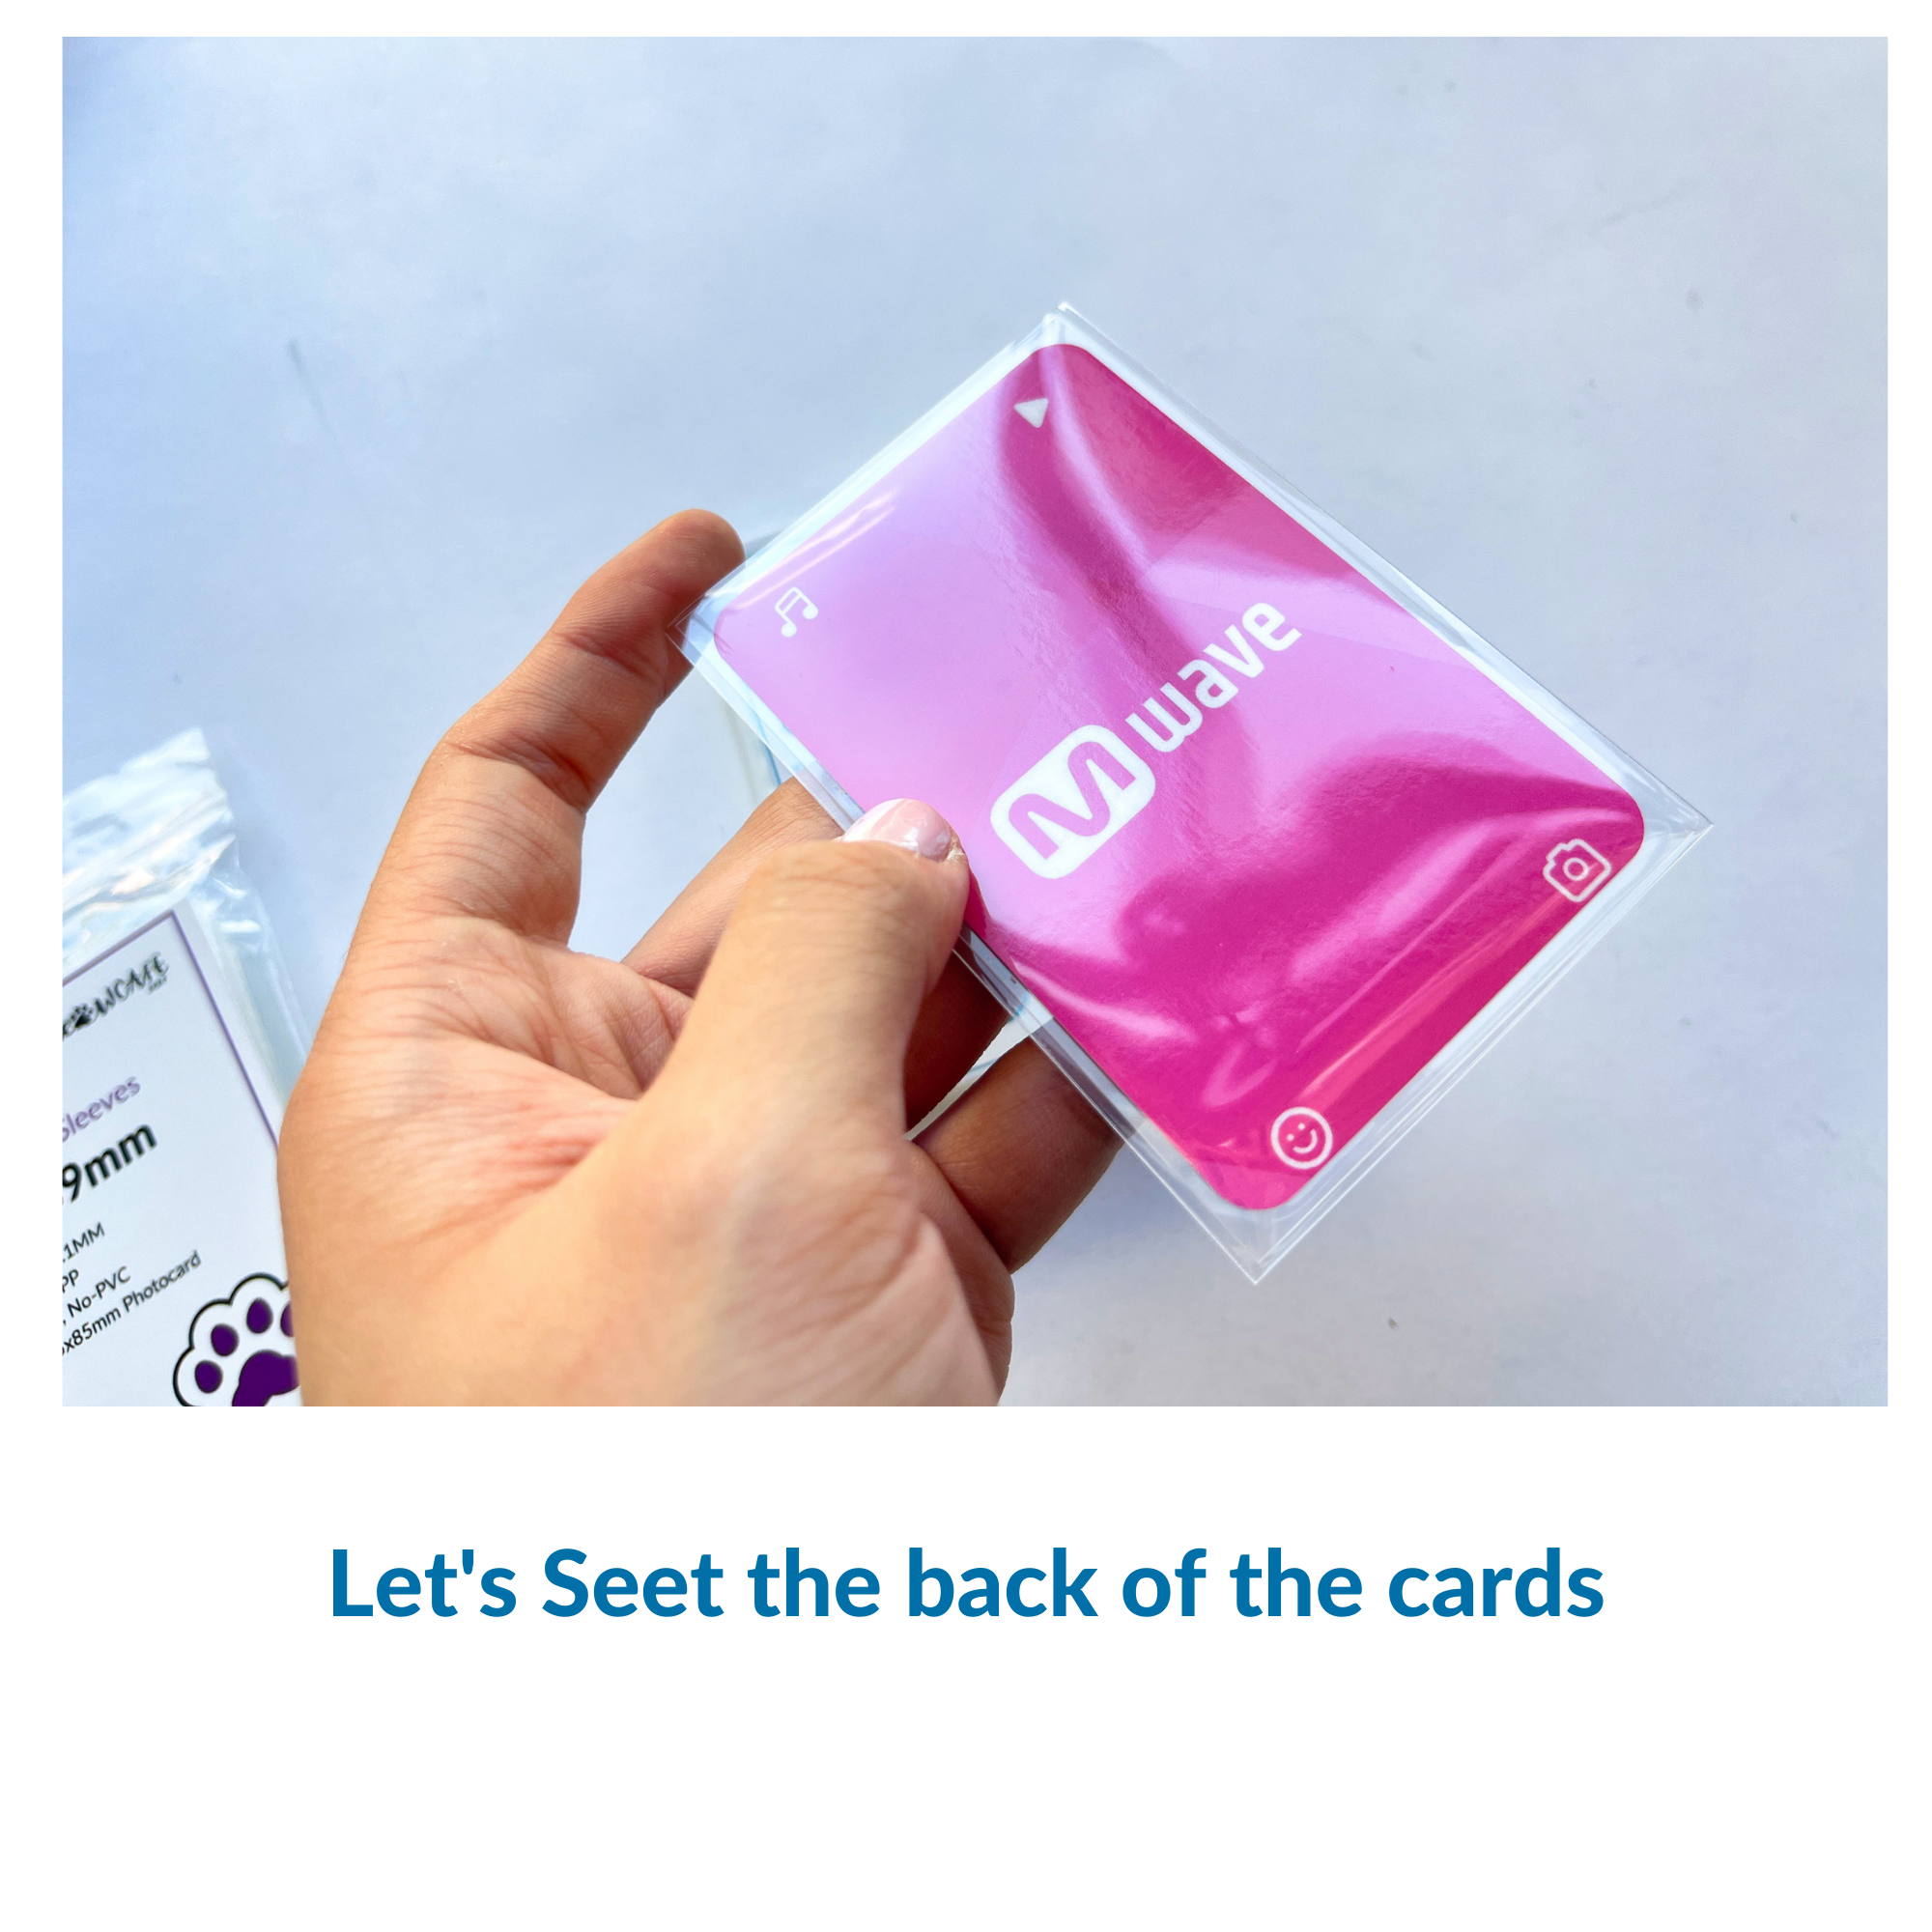 [Valued Bundle] Meowcafe Premium CPP Card Sleeve 400 Sleeves Double Sleeving Bundle Set  + FREE Sleeve Organizer Box